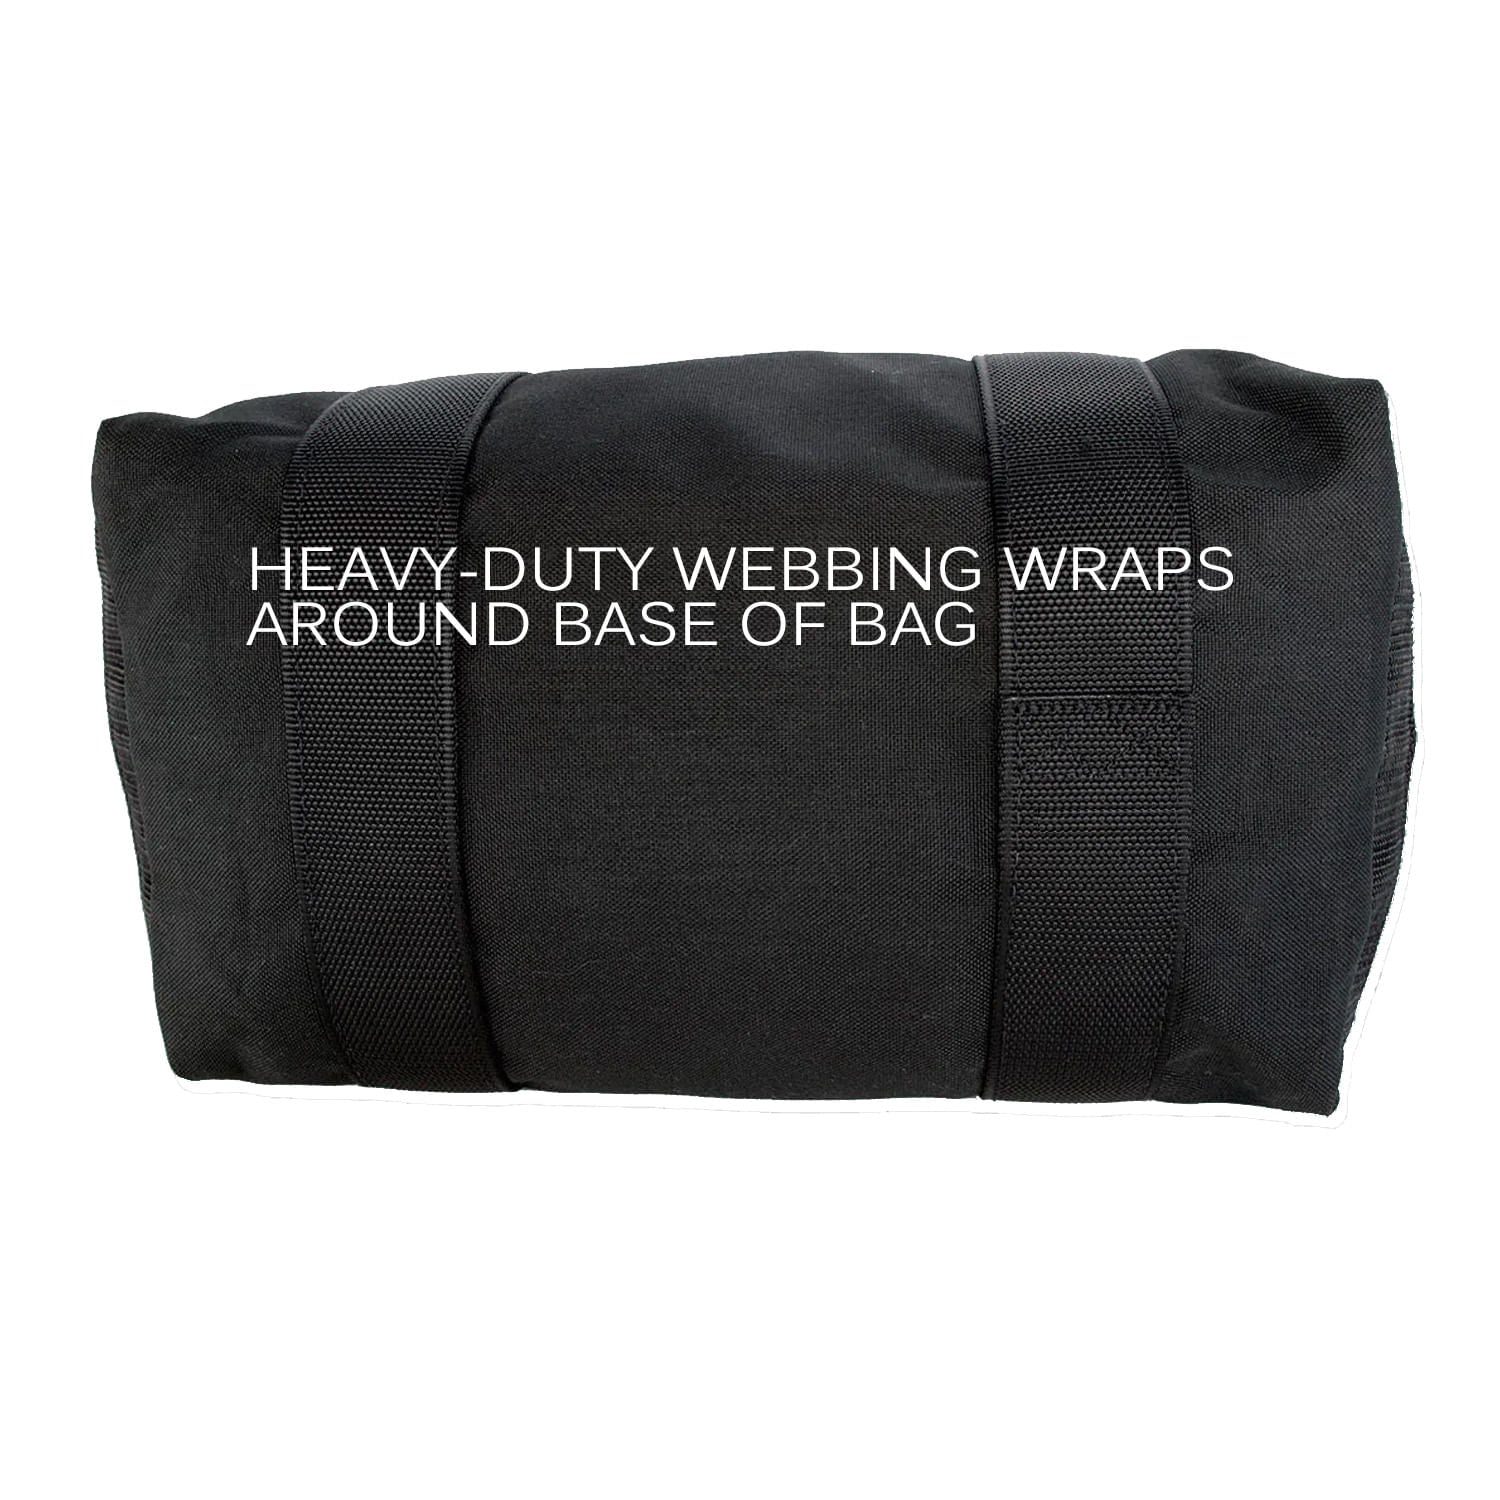 Heavy duty webbing wraps around the base of bag.